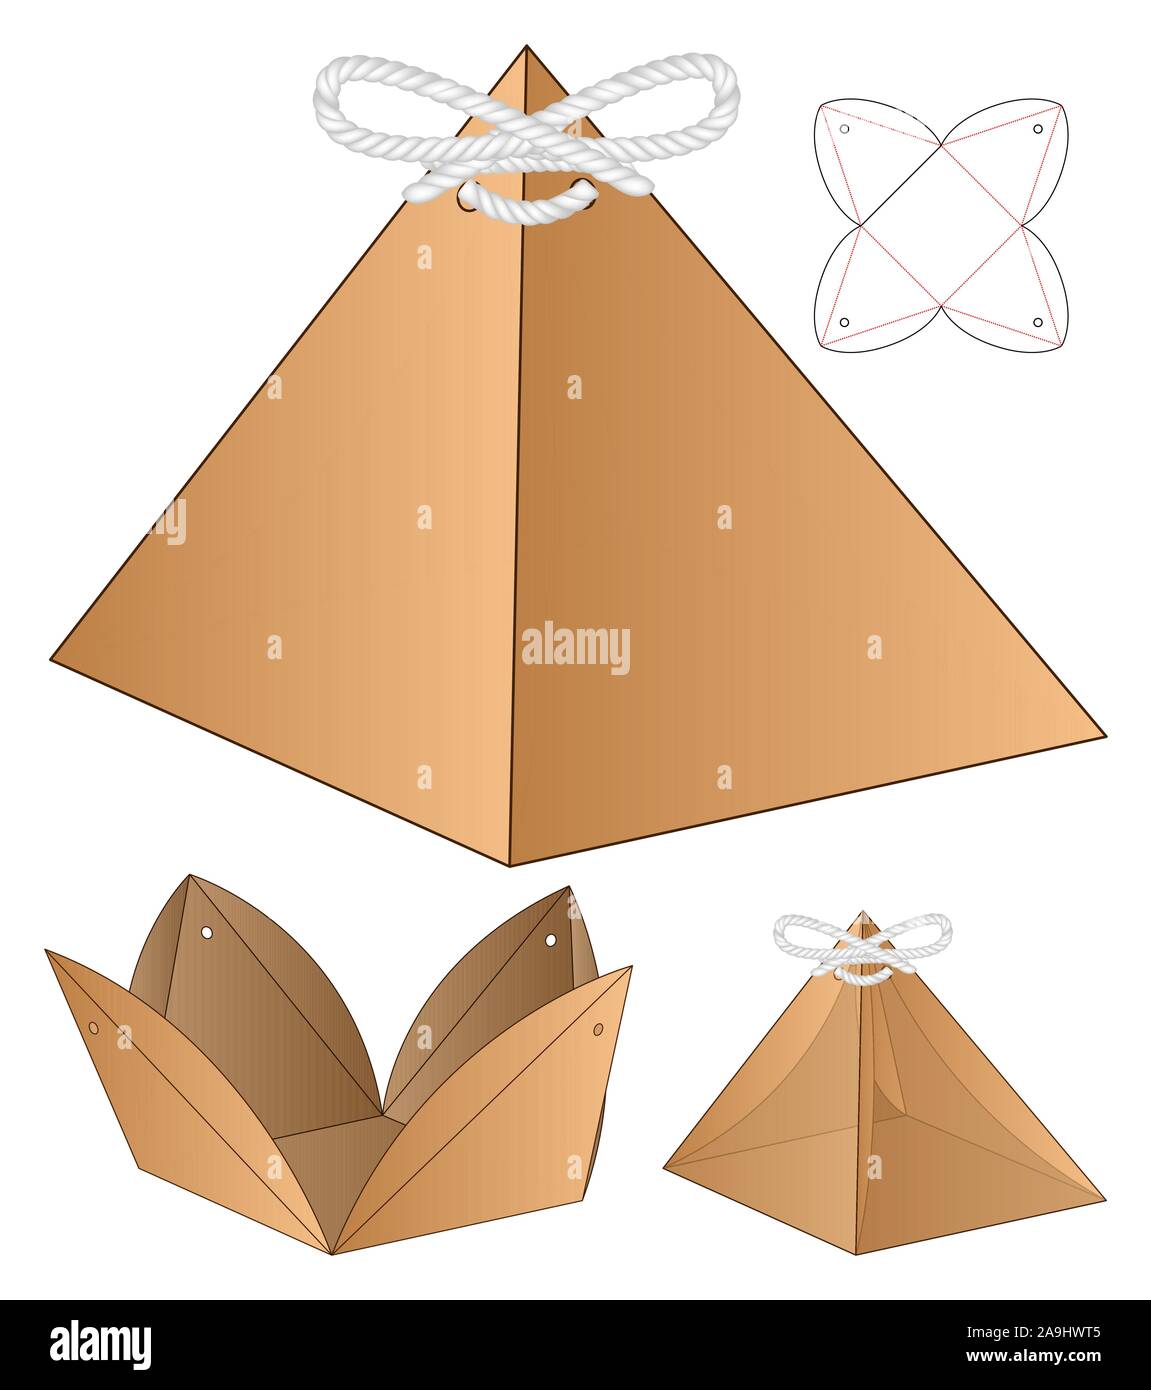 Pyramid Shape Box packaging die cut template design Stock Vector